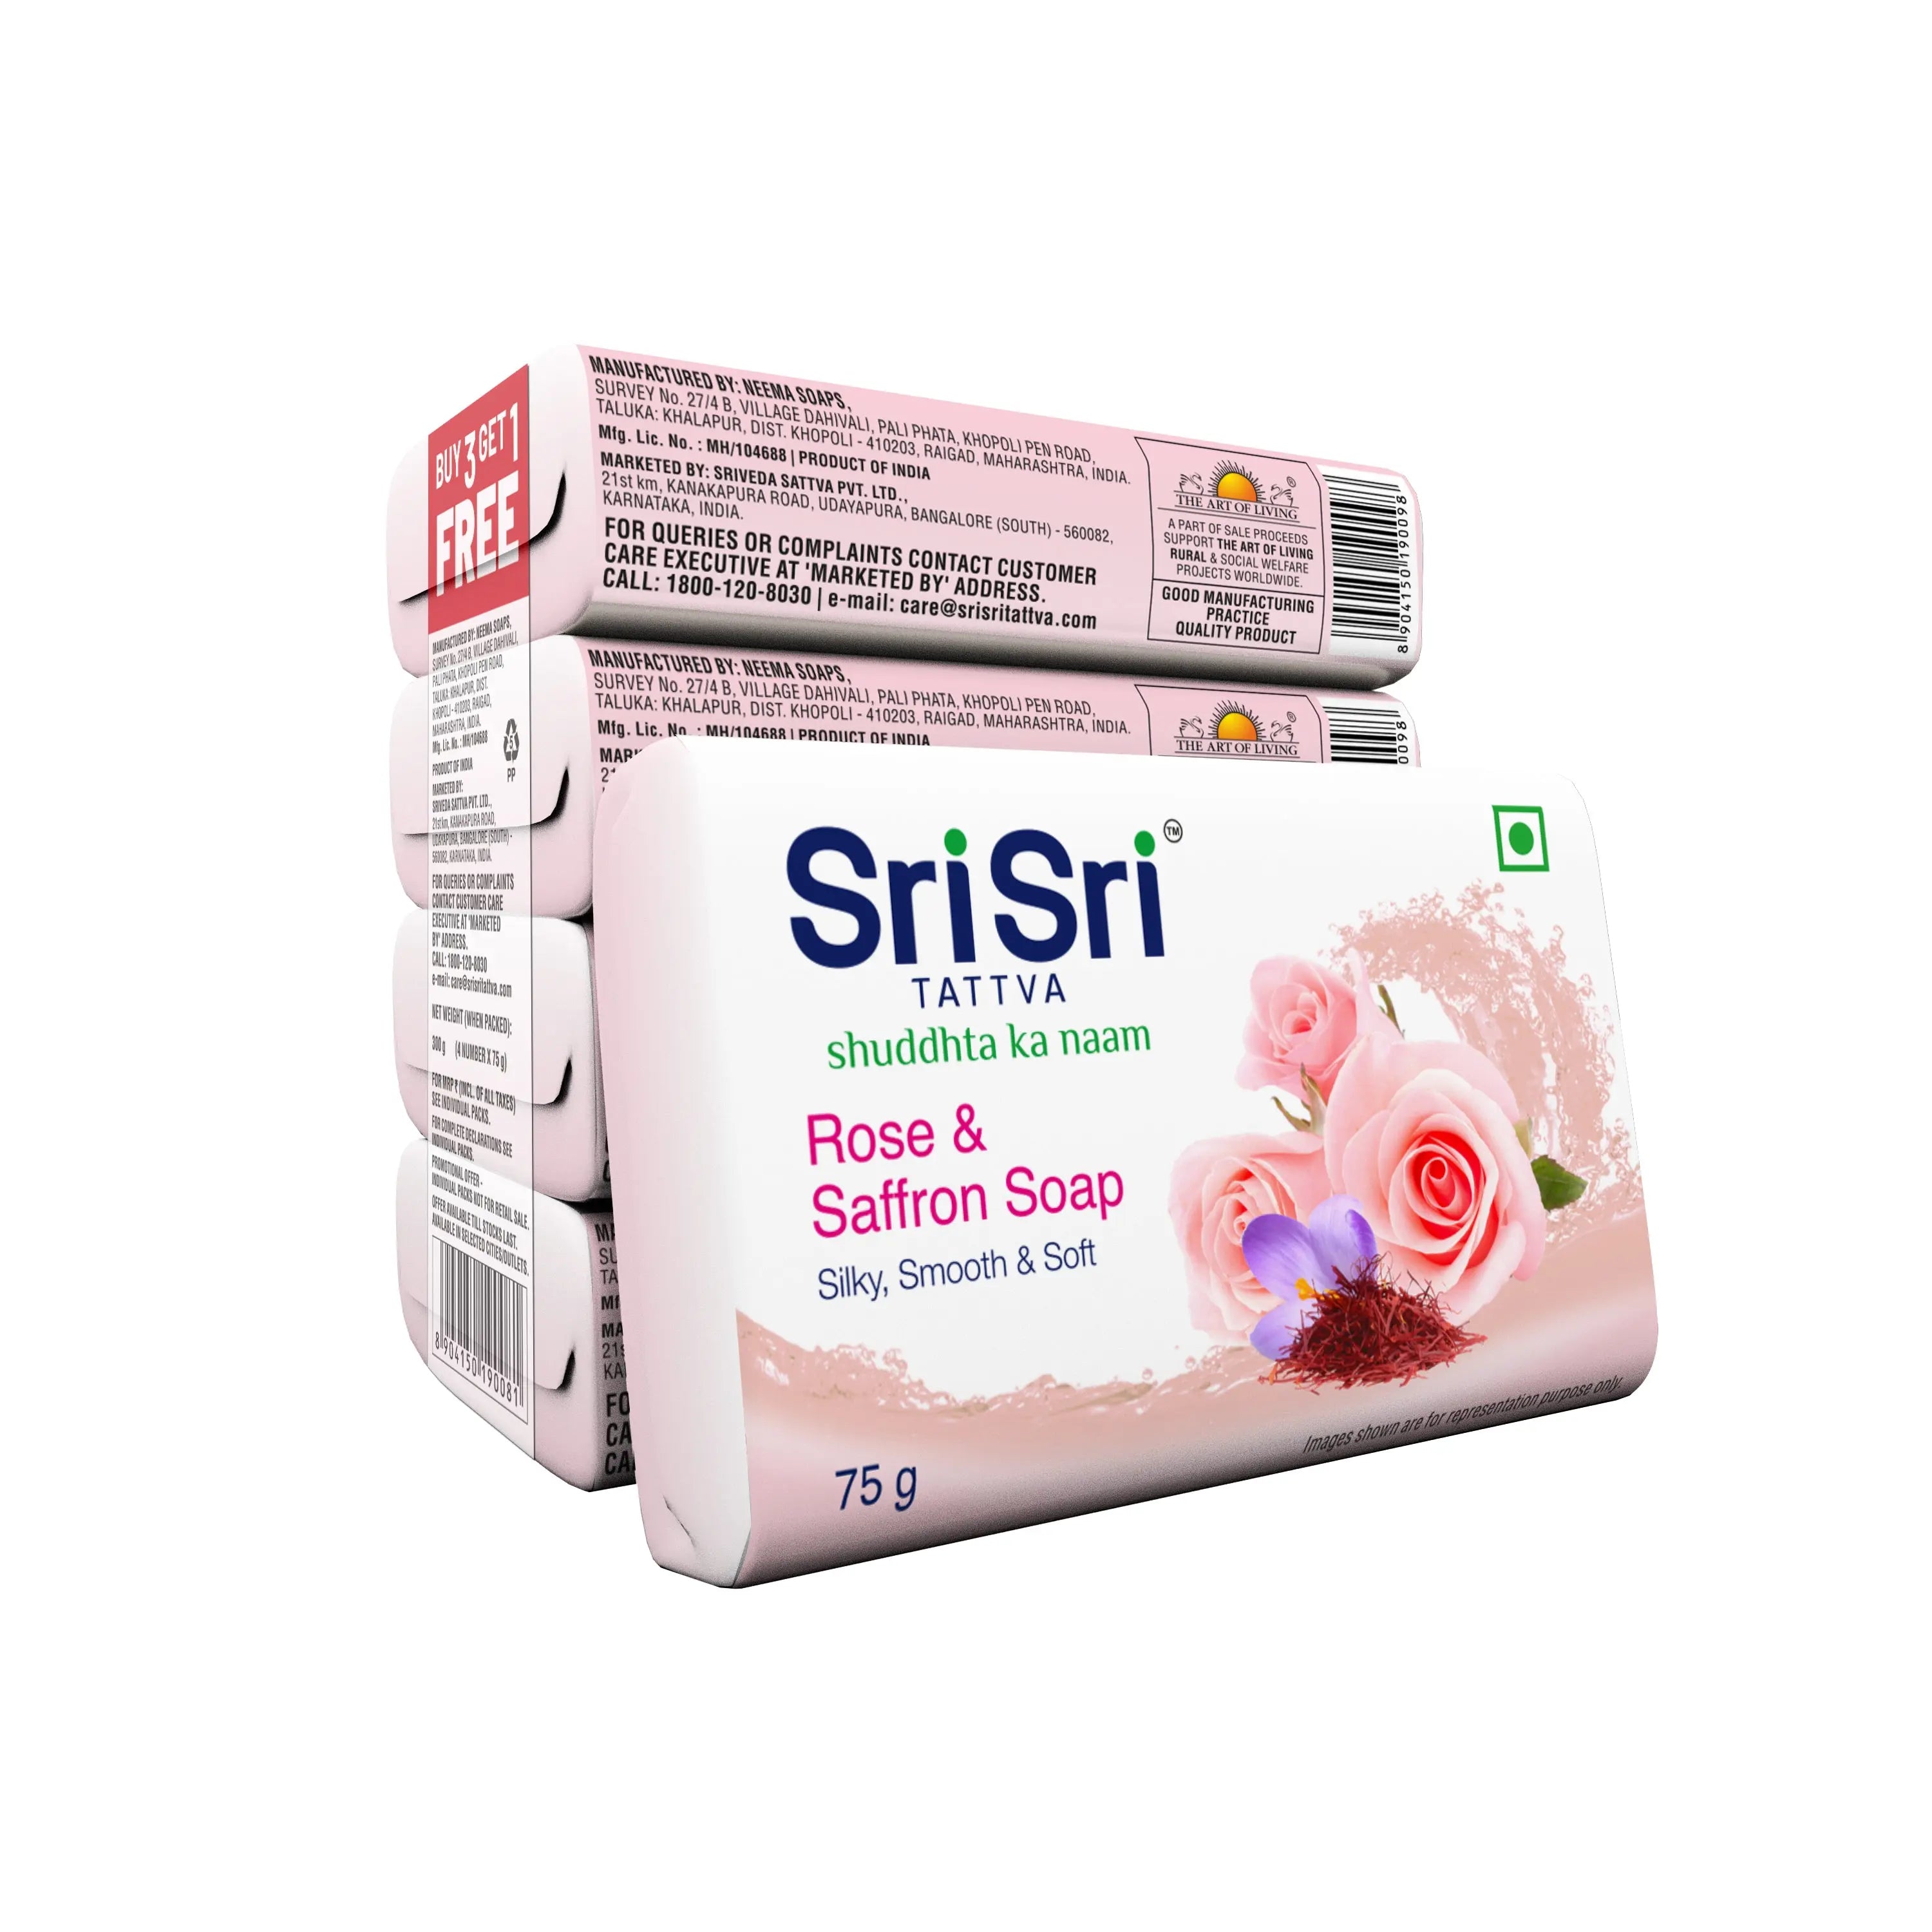 Rose & Saffron Soap | Silky, Smooth & Soft Skin | Buy 3 Get 1 Free | 75 g Each